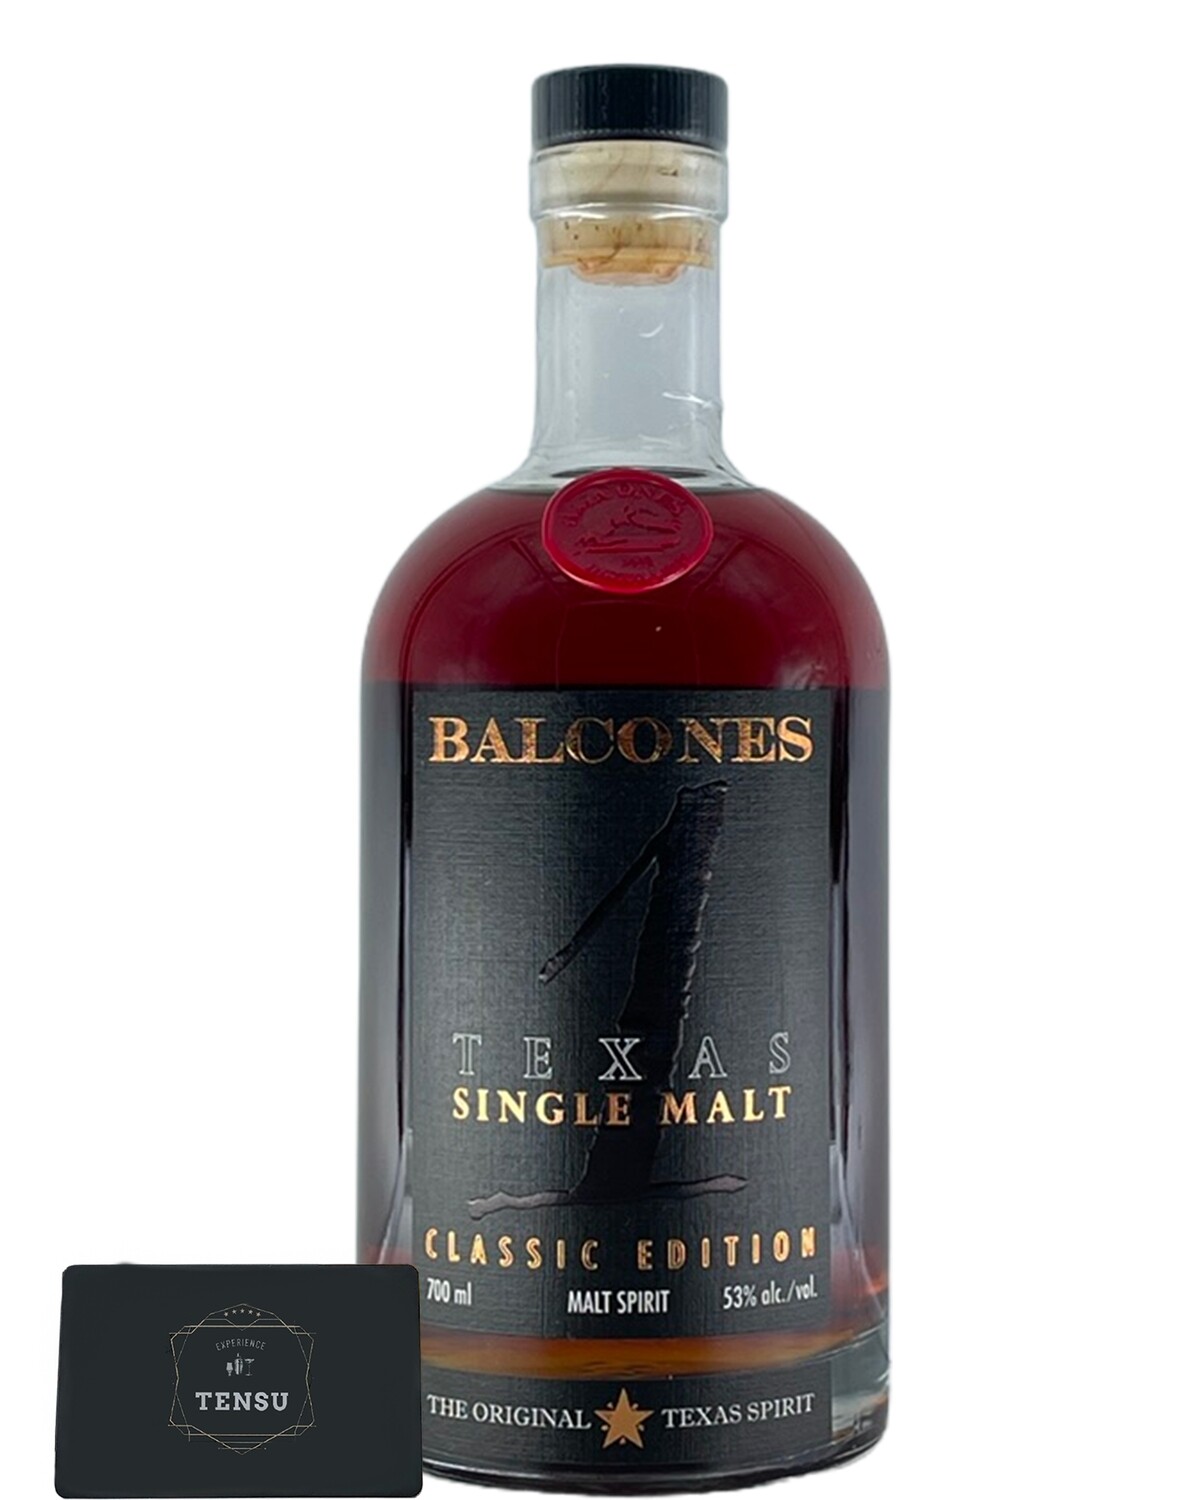 Balcones 1 Texas Single Malt Whisky (25-05-2022) 53,0 "OB"